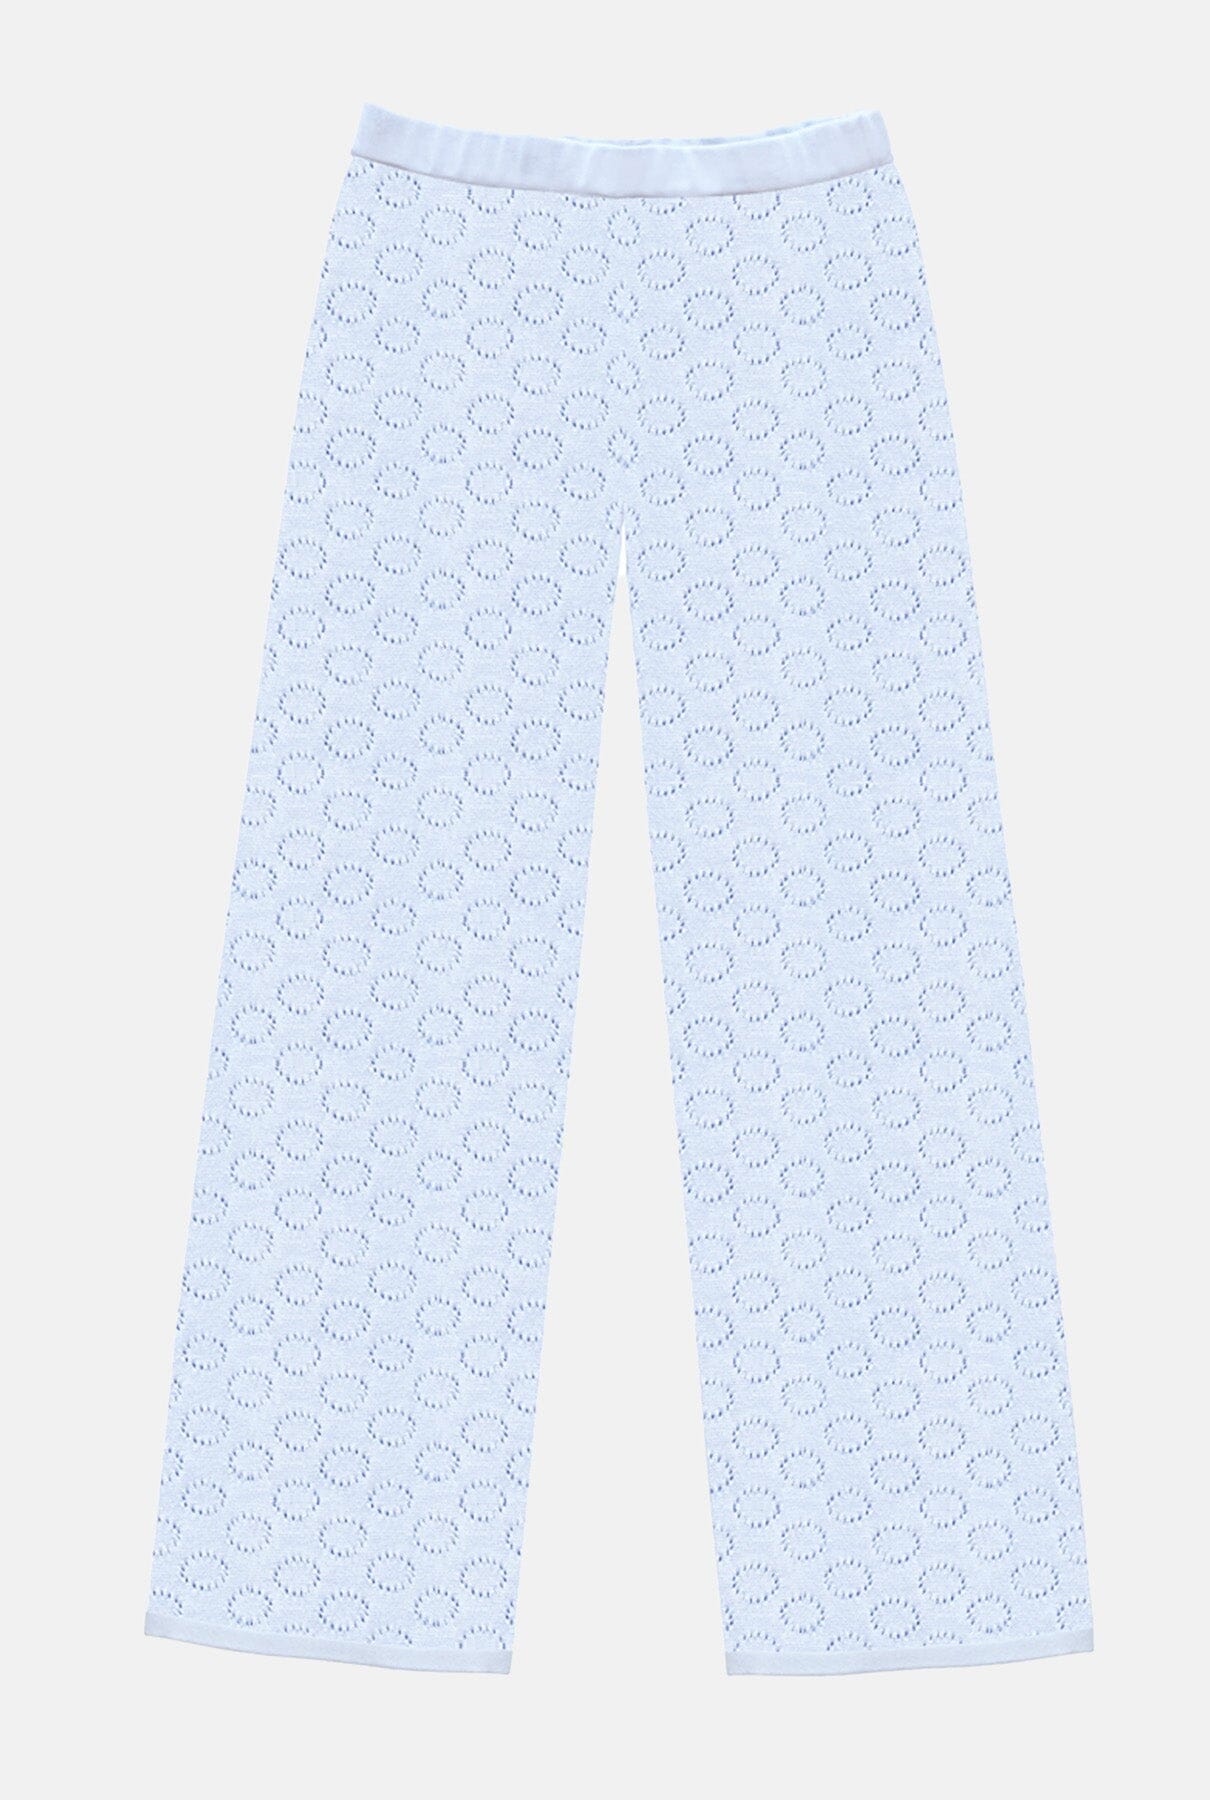 Honeycomb Pants Silver Trousers Carlota Cahis 